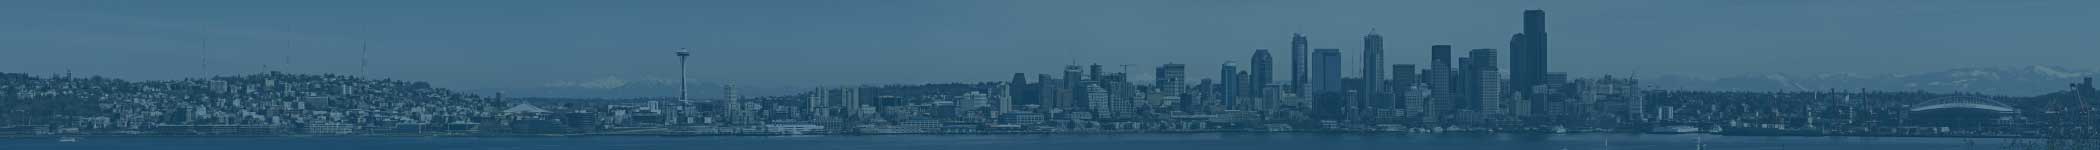 Seattle Commercial Real Estate Blog